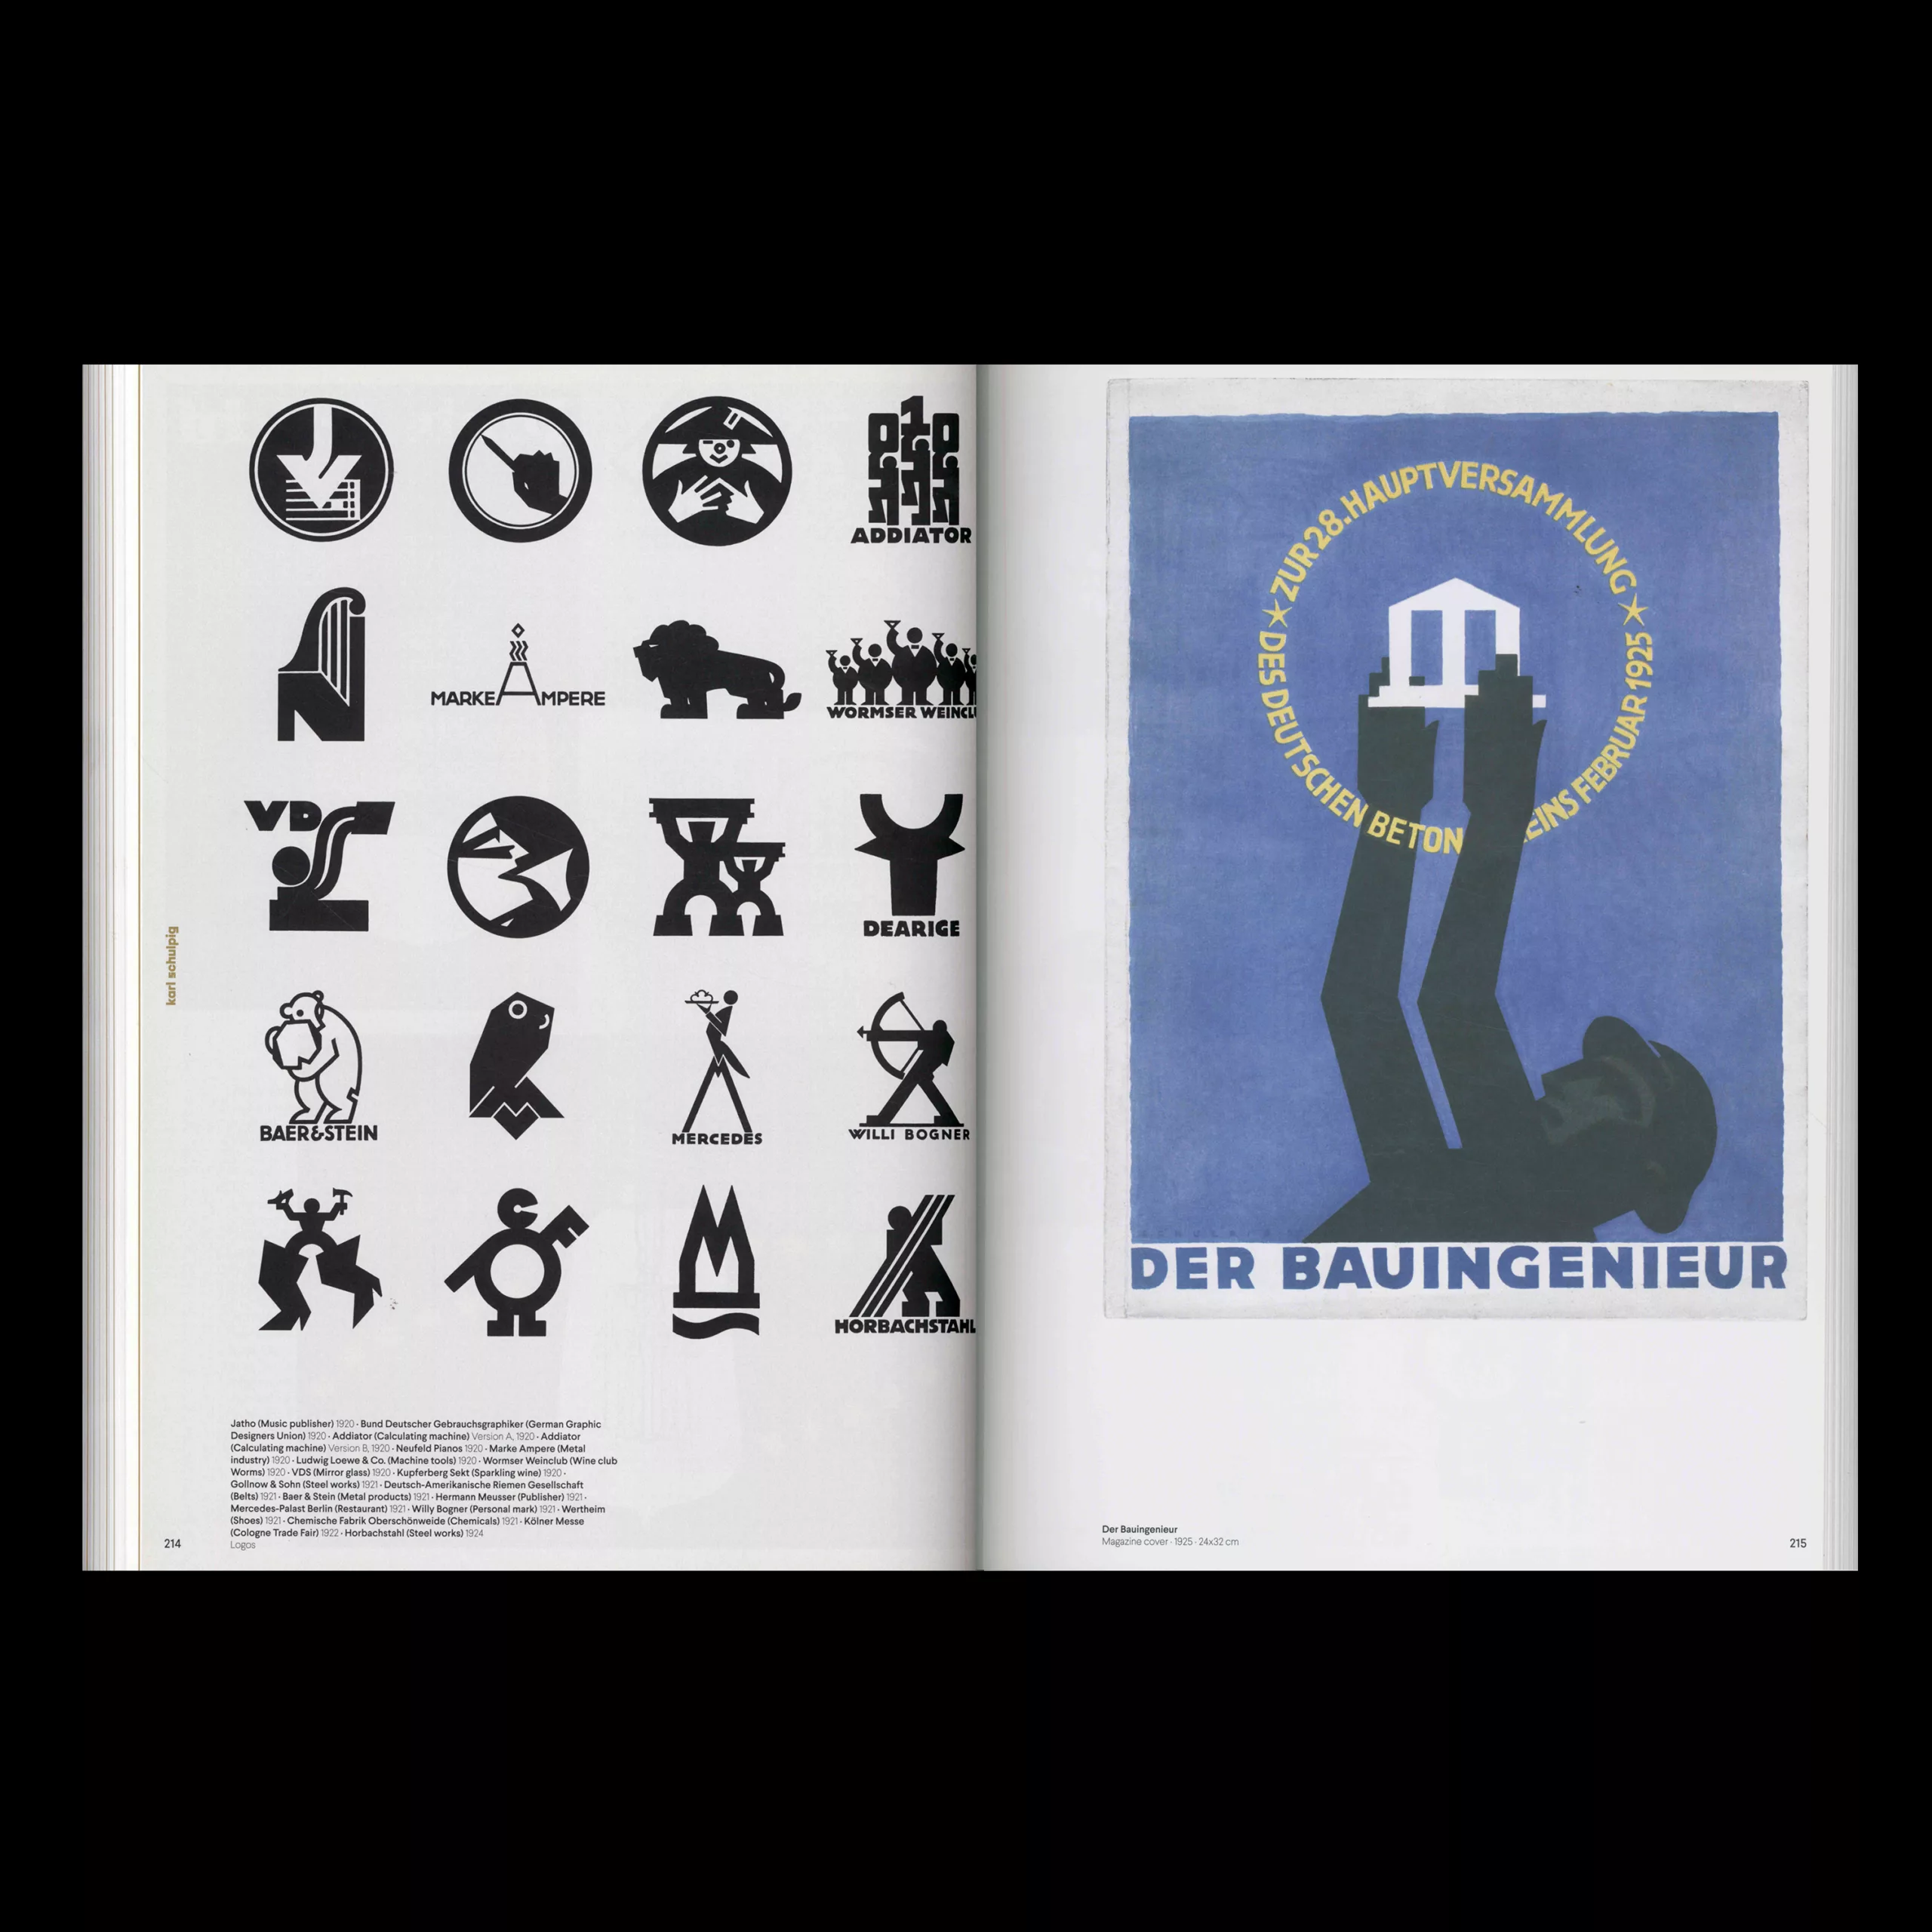 Pioneers of German Graphic Design, Callisto Publishers, 2017